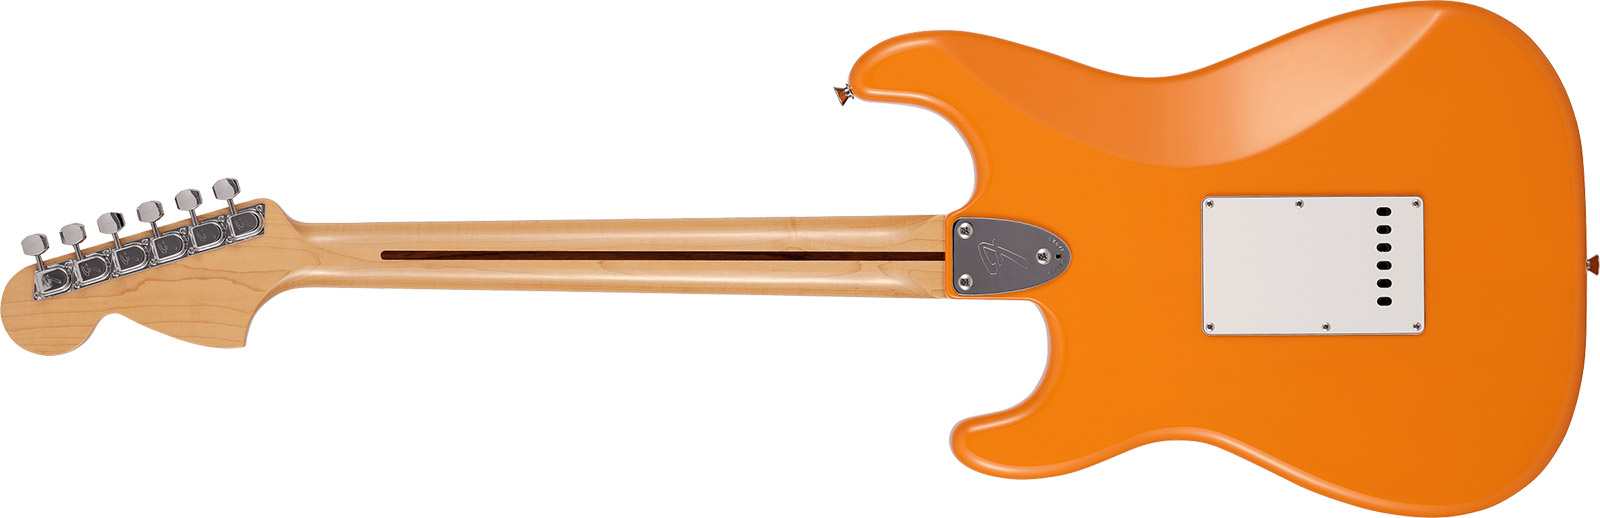 Fender Strat International Color Ltd Jap 3s Trem Rw - Capri Orange - Guitare Électrique Forme Str - Variation 1